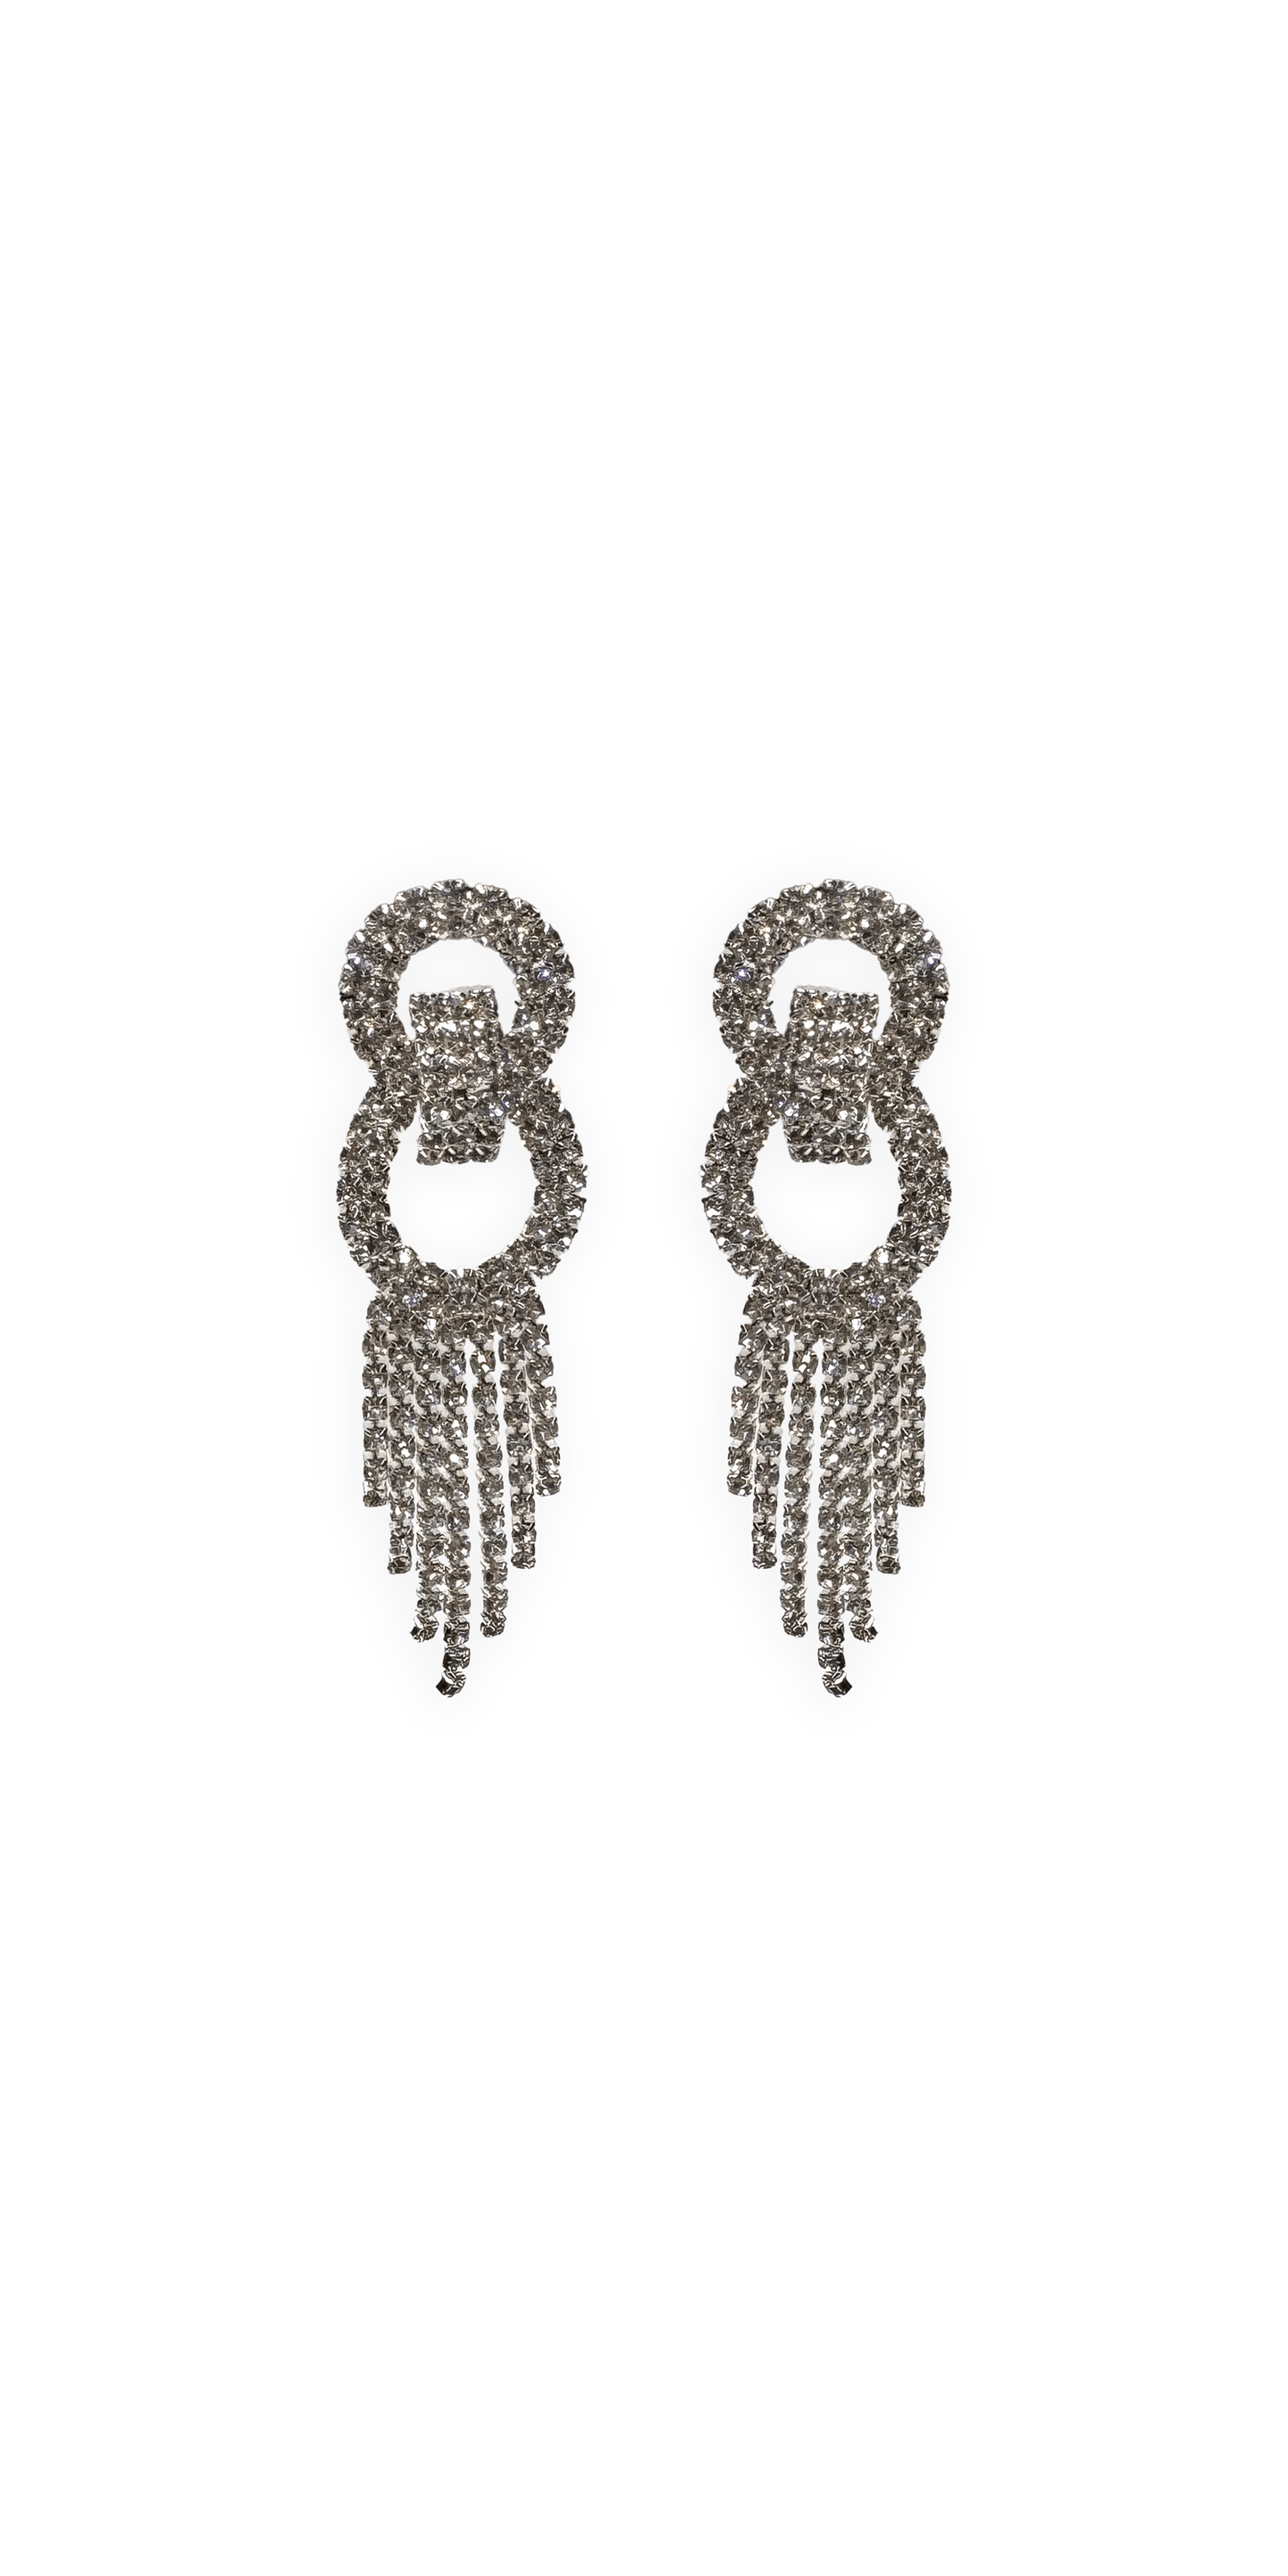 Camille La Vie Rhinestone Interlock Mult Stand Earrings one-size / silver